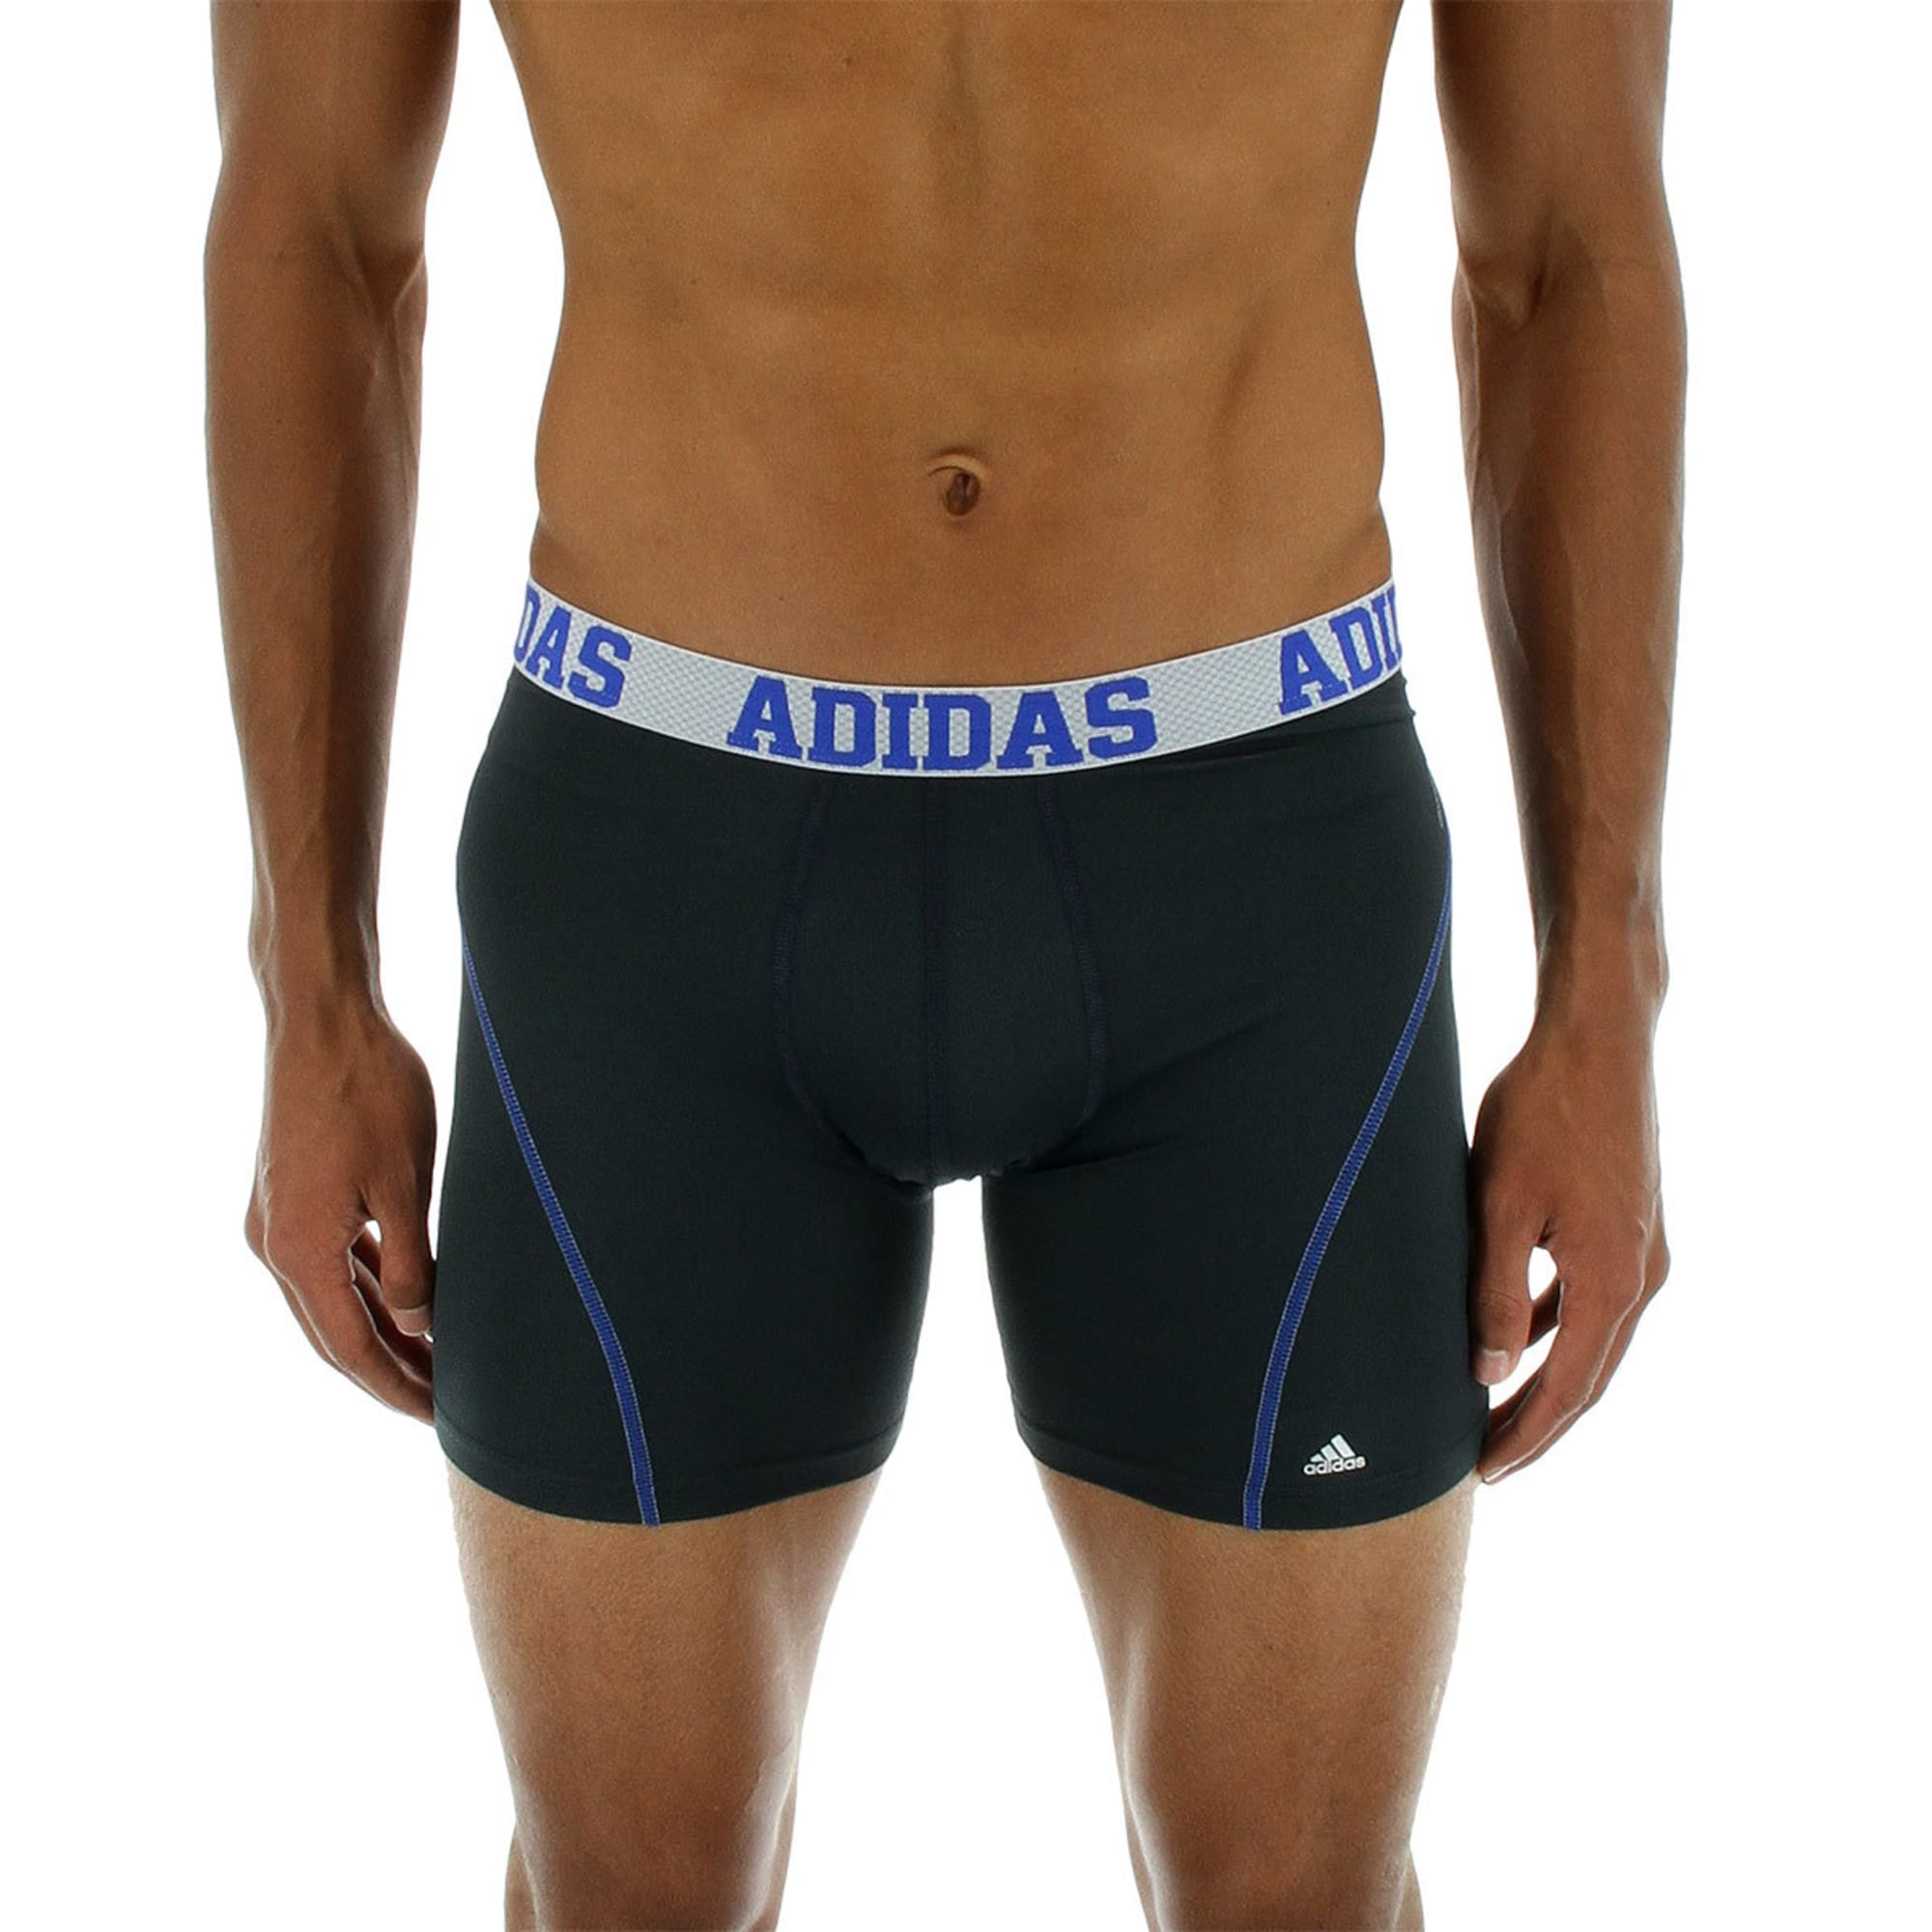 Adidas Climacool 2pack boxer brief 5” seam